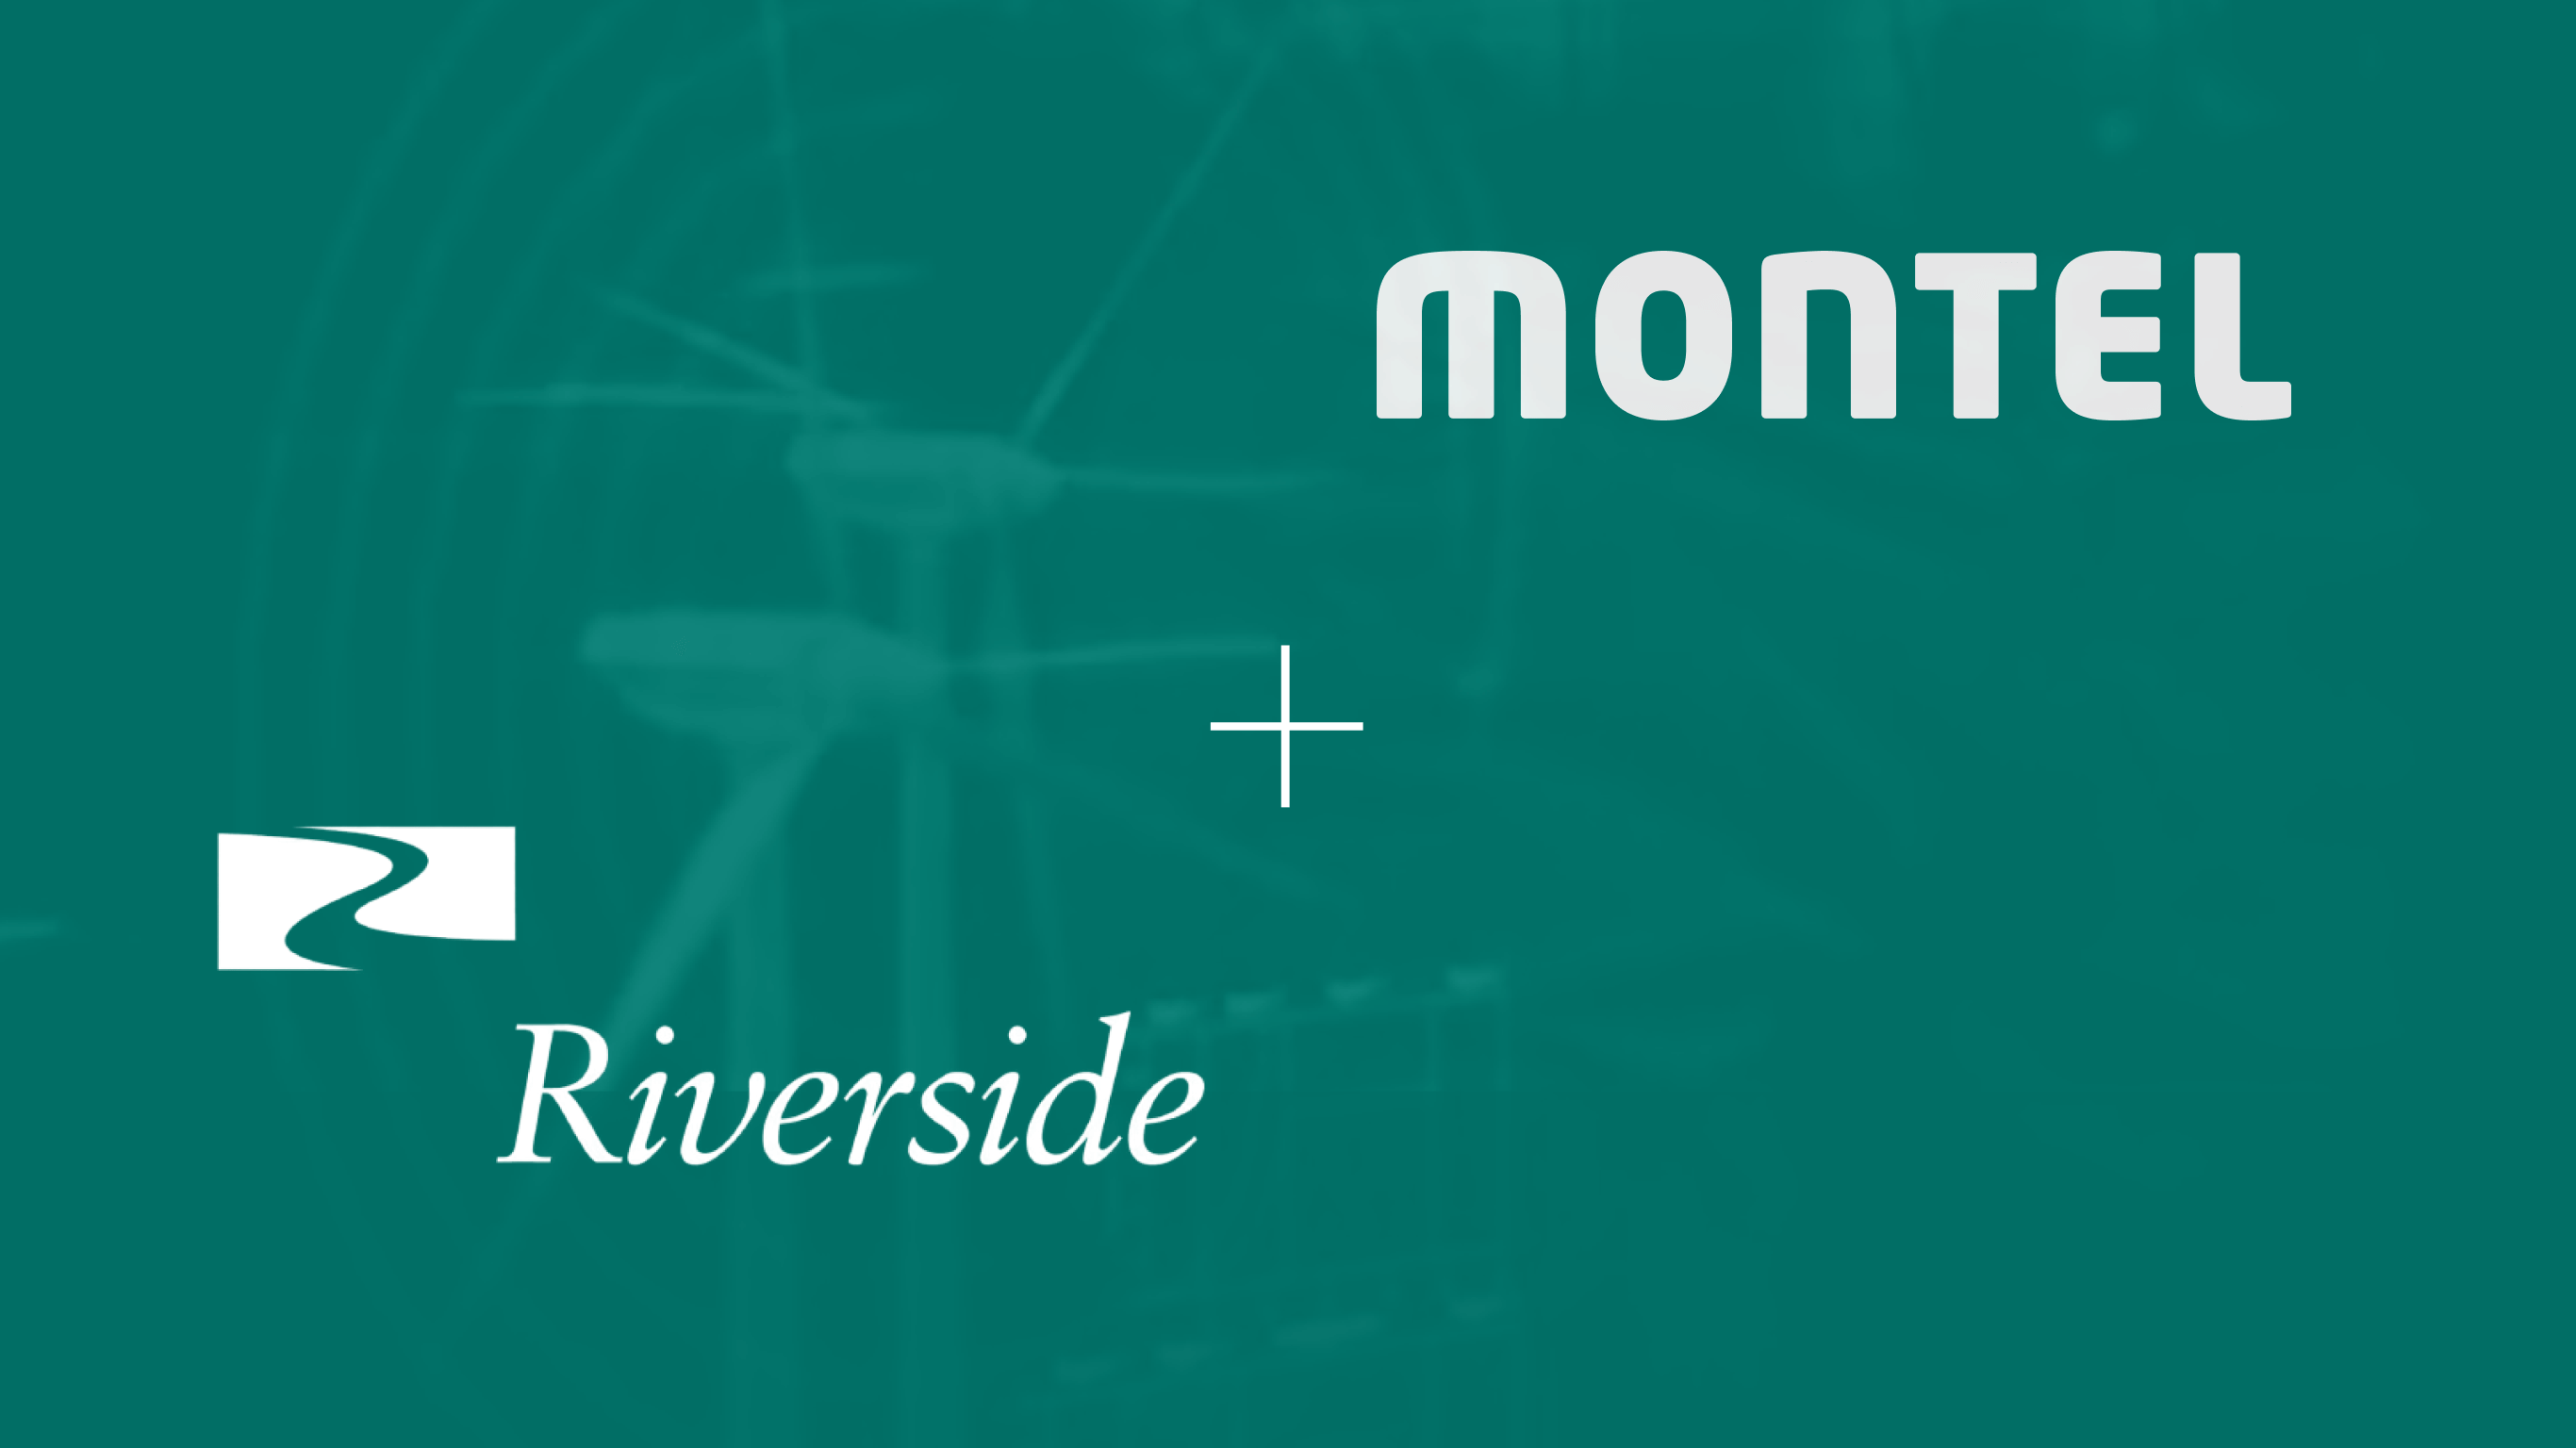 Tech & Product DD | Acquisition | Code & Co. advises Riverside on Montel AS